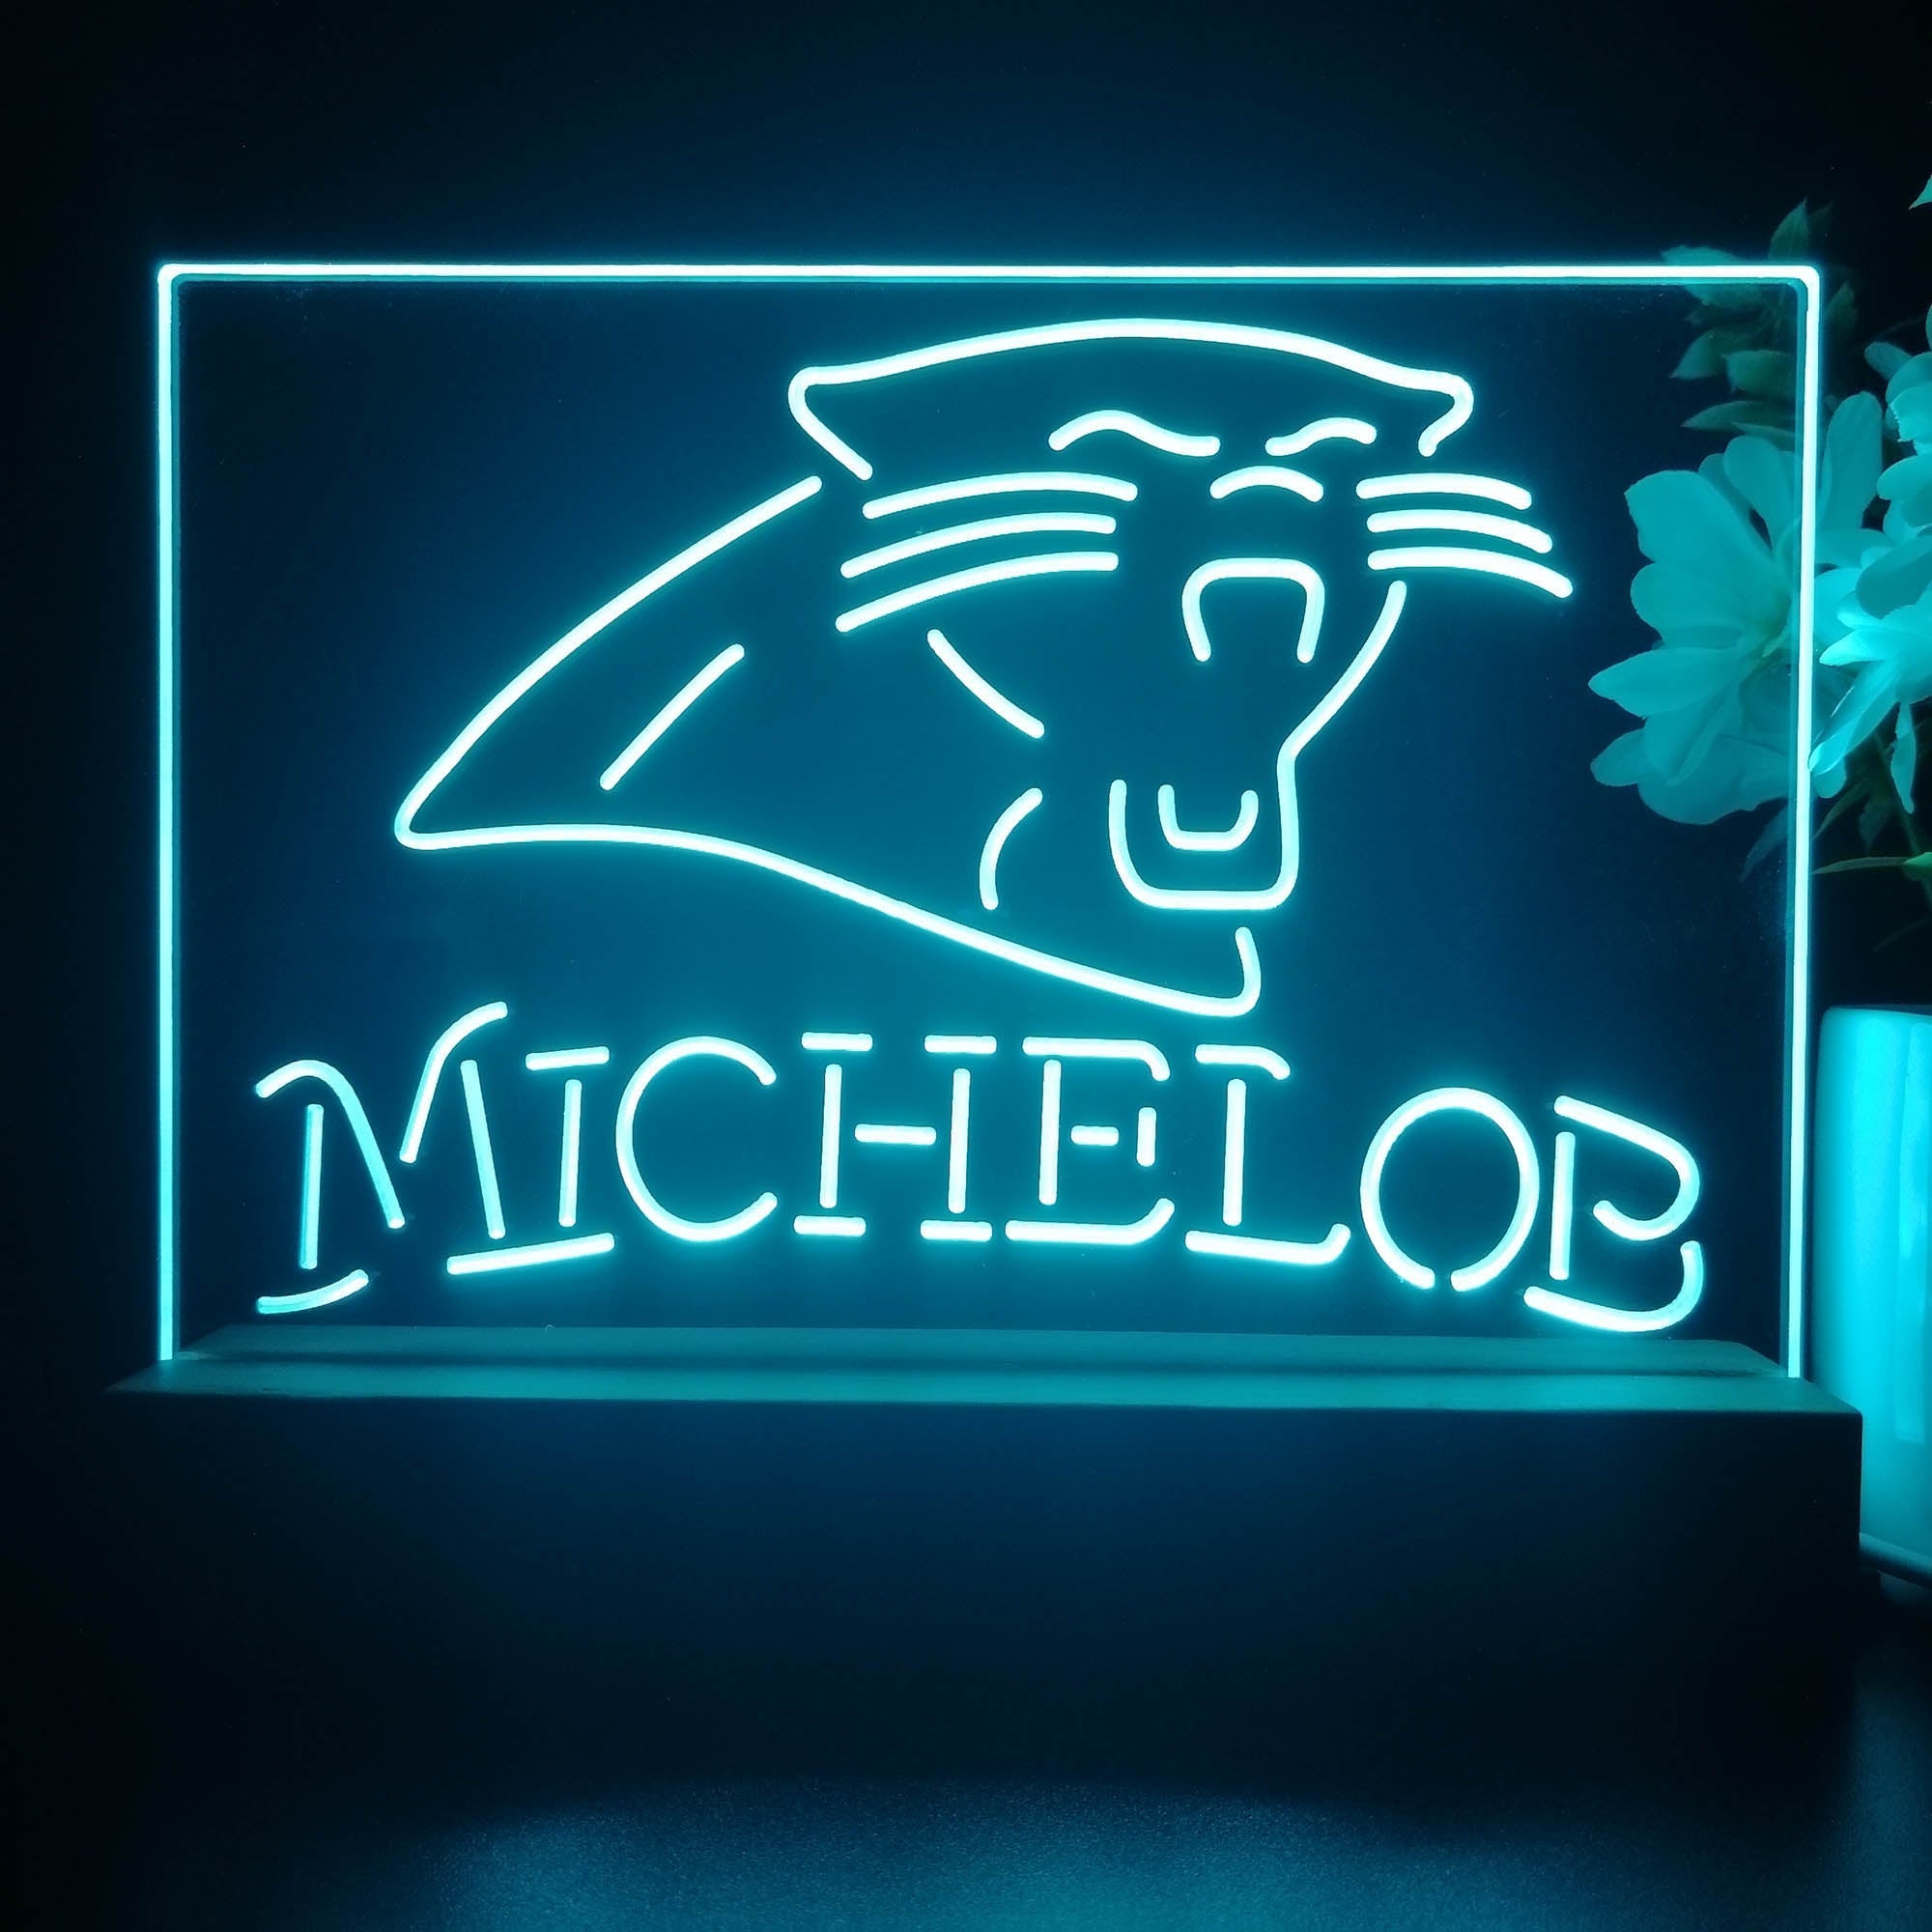 Michelob Bar Carolina Panthers 3D Illusion Night Light Desk Lamp